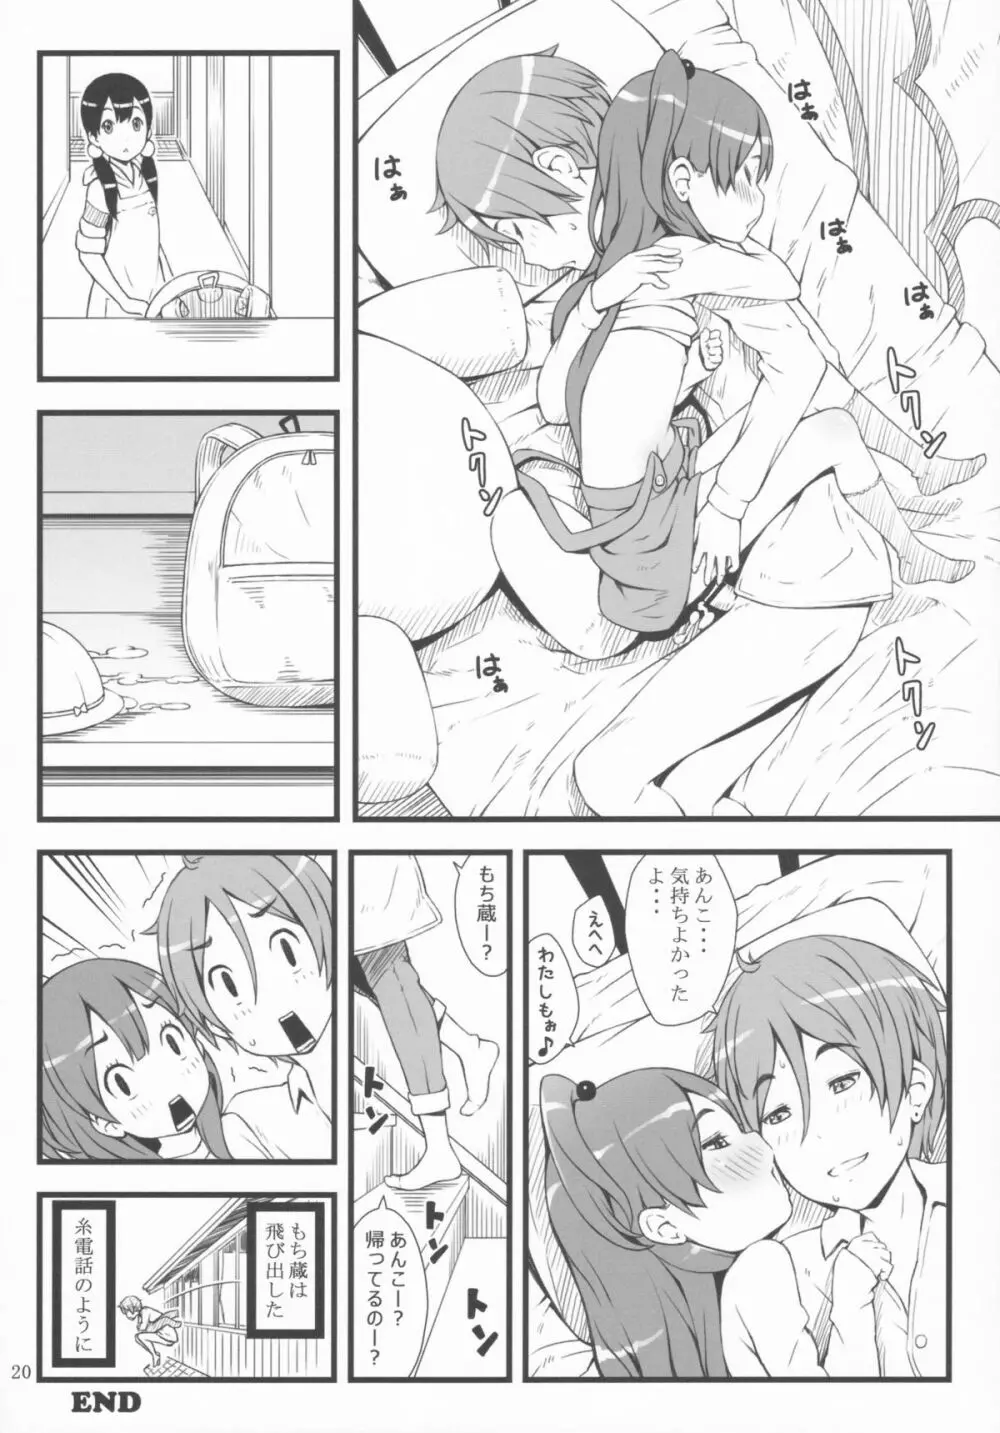 mochi-mochi anko chan 19ページ